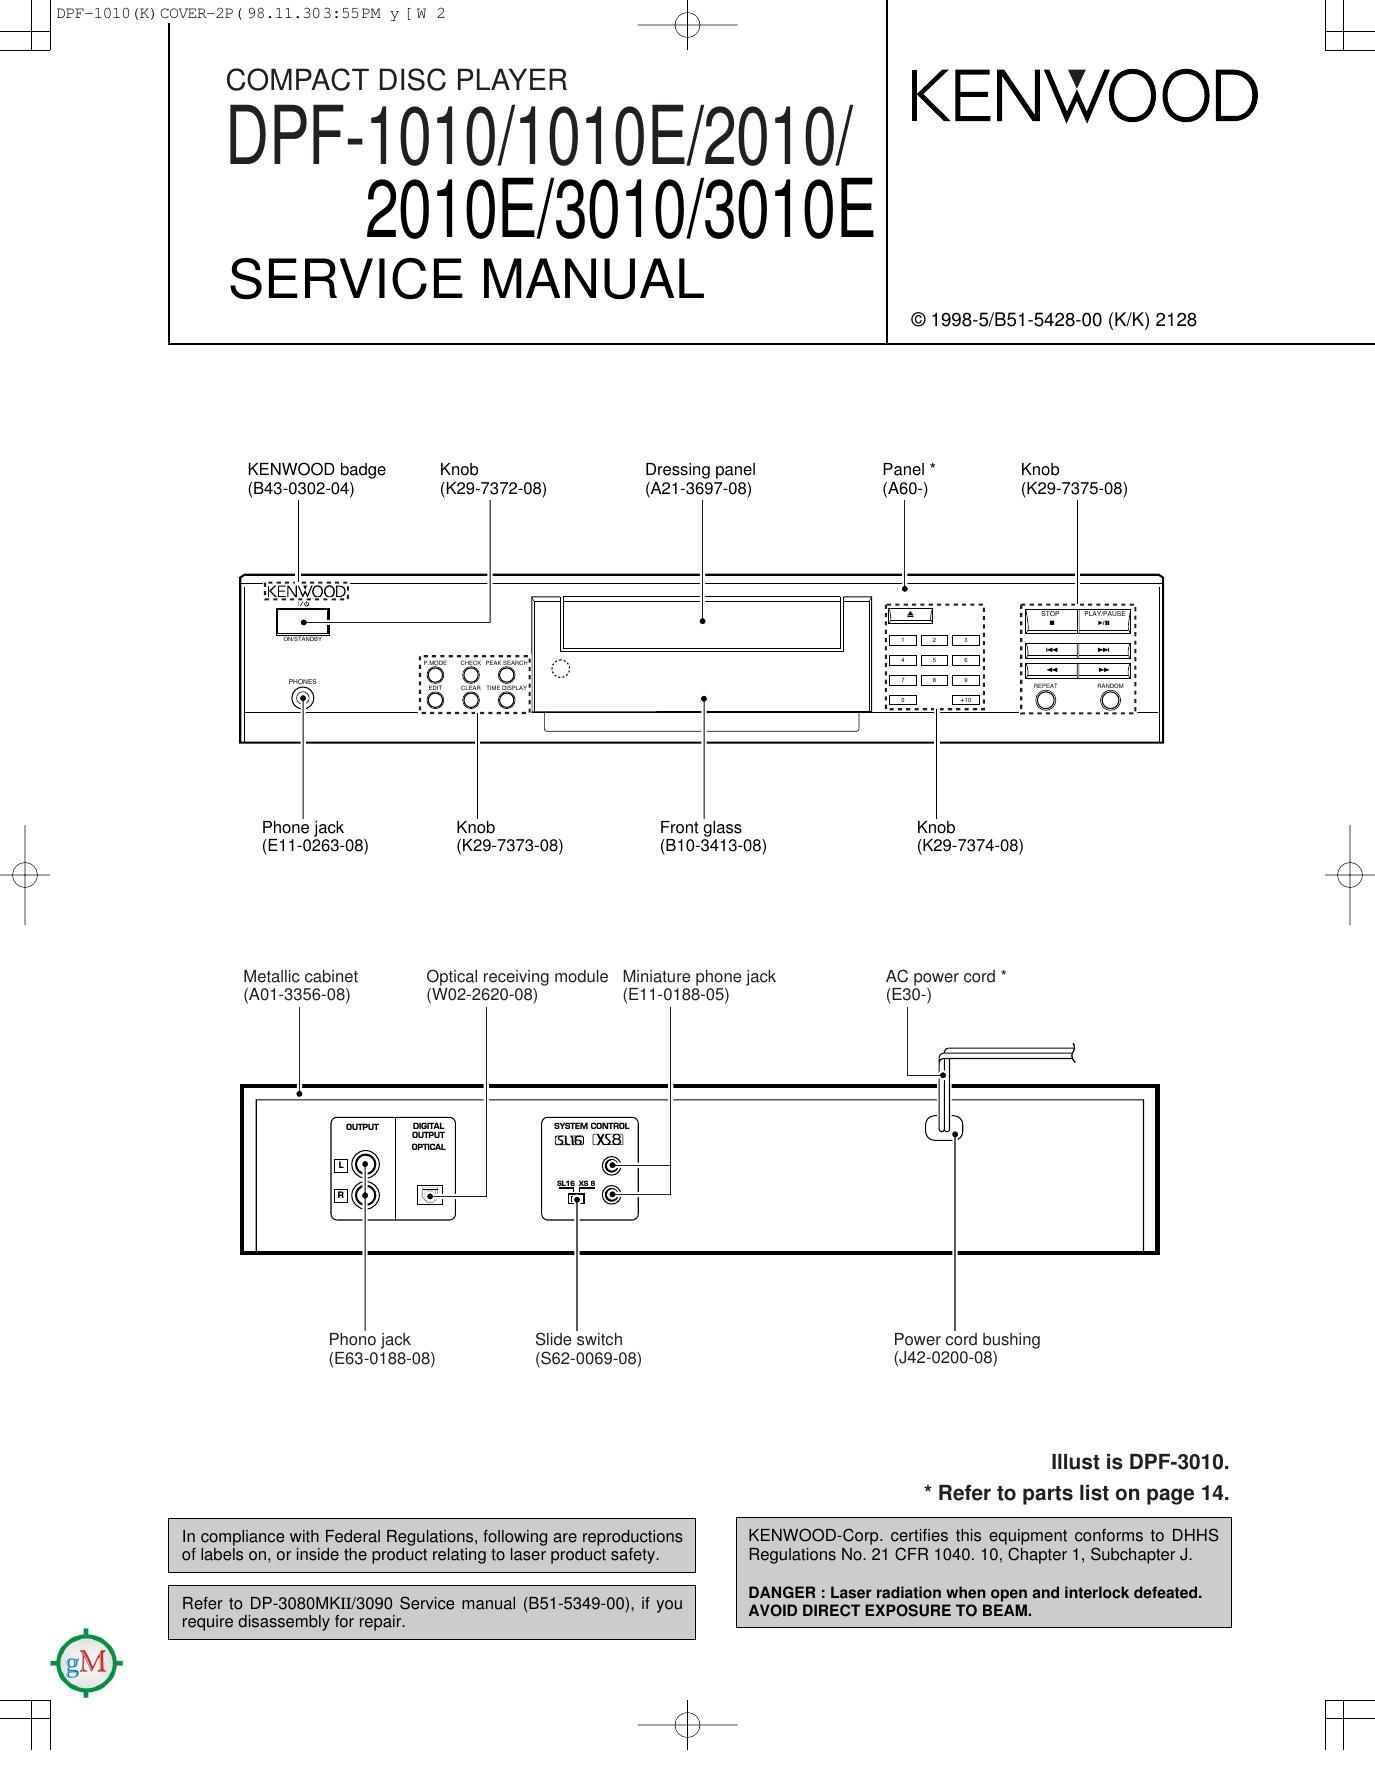 Kenwood DPF 3010 Service Manual